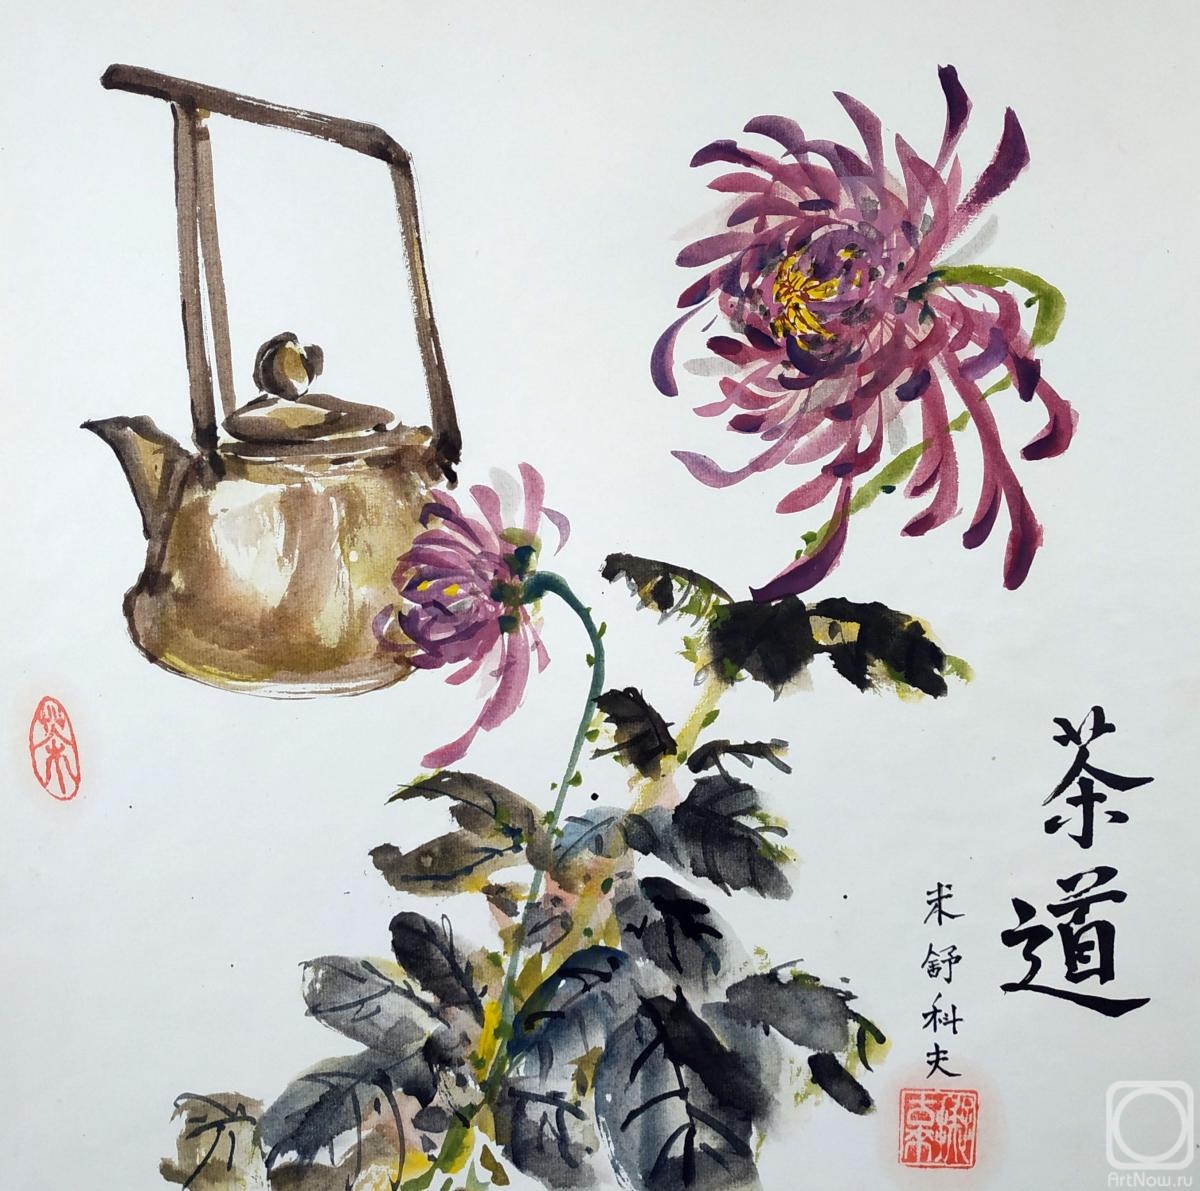 Mishukov Nikolay. Chrysanthemums "The Way of Tea"